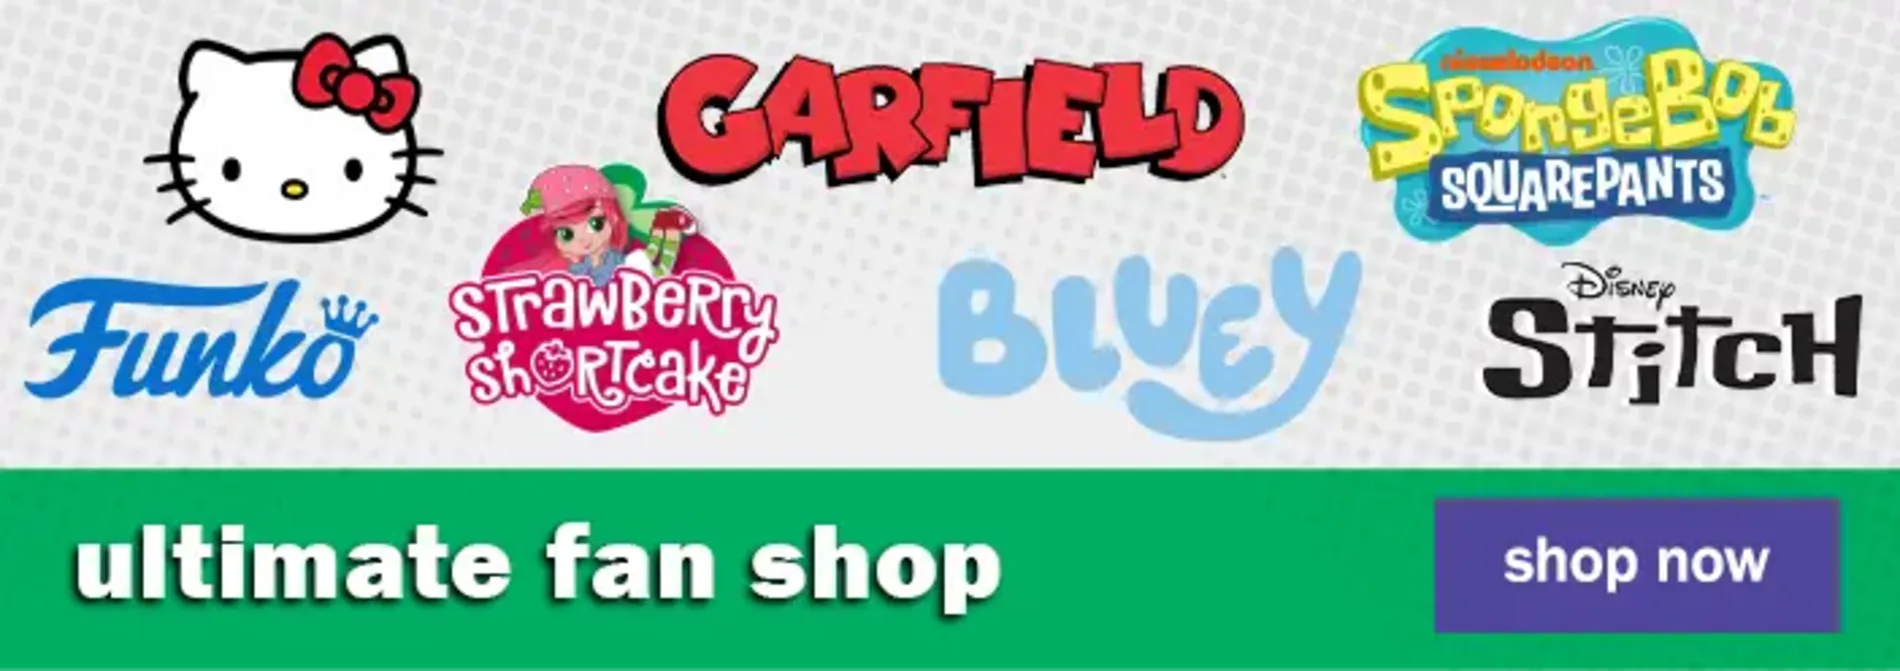 Ultimate Fan Shop. Shop Now. Strawberry Shortcake, Funko, Garfield, Disney Stitch, Spongebob Squarepants, Bluey, Hello Kitty